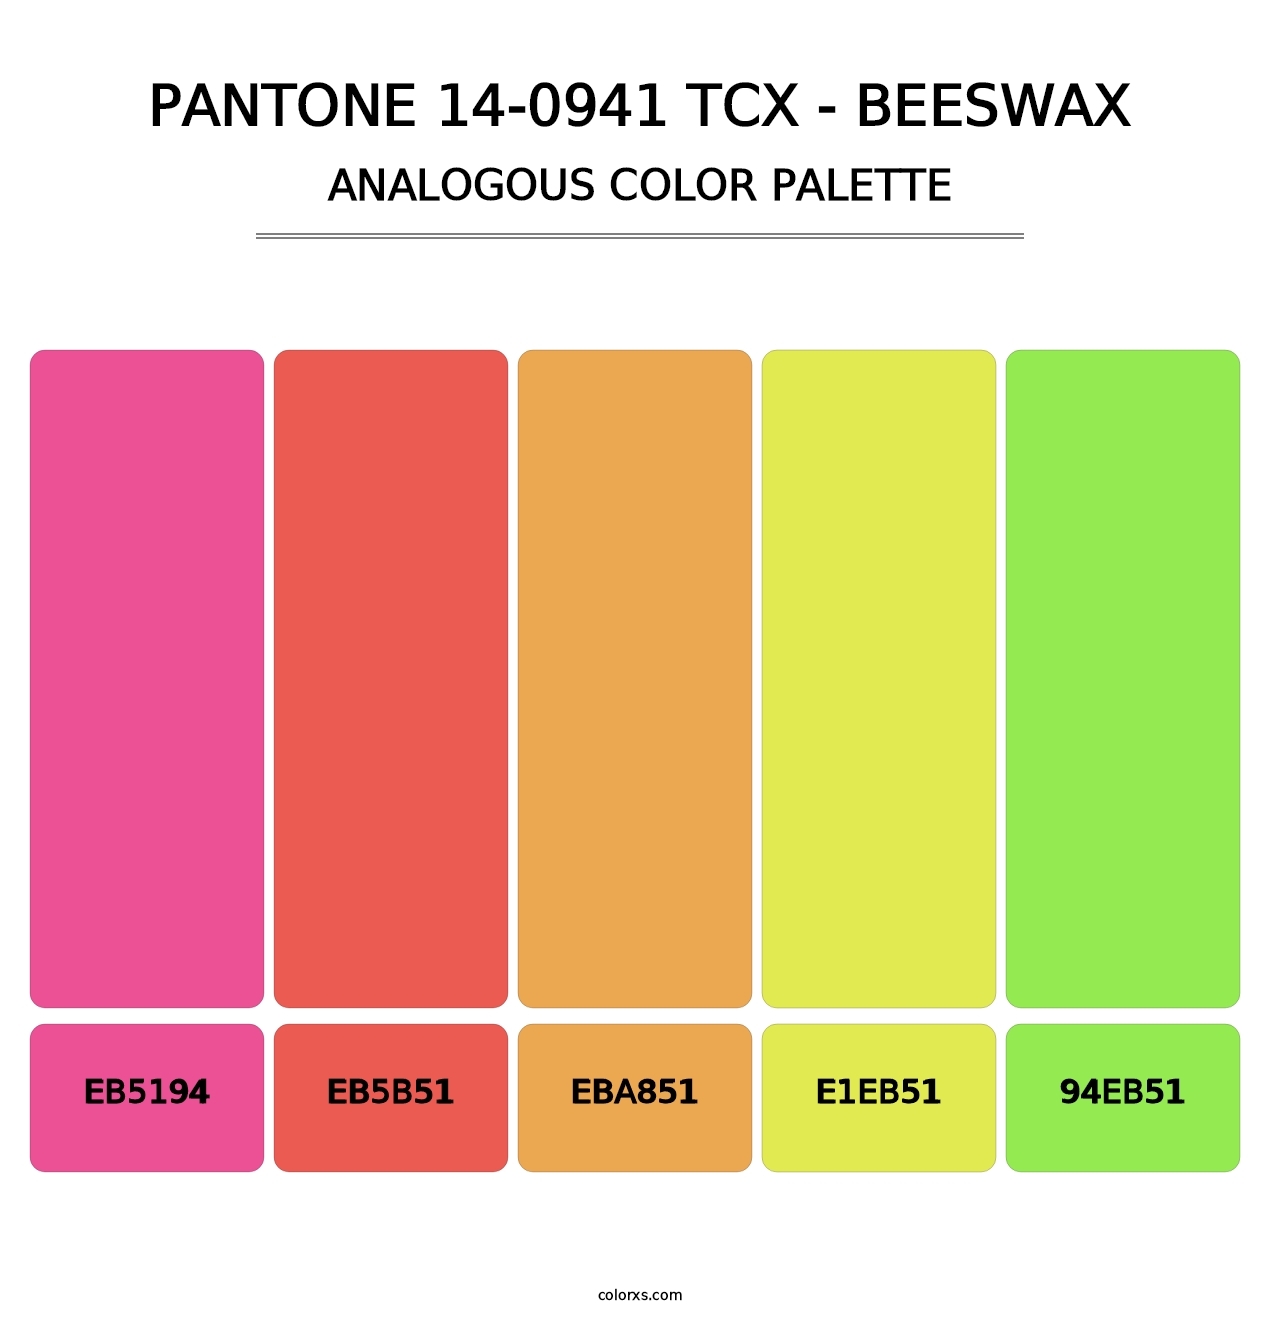 PANTONE 14-0941 TCX - Beeswax - Analogous Color Palette